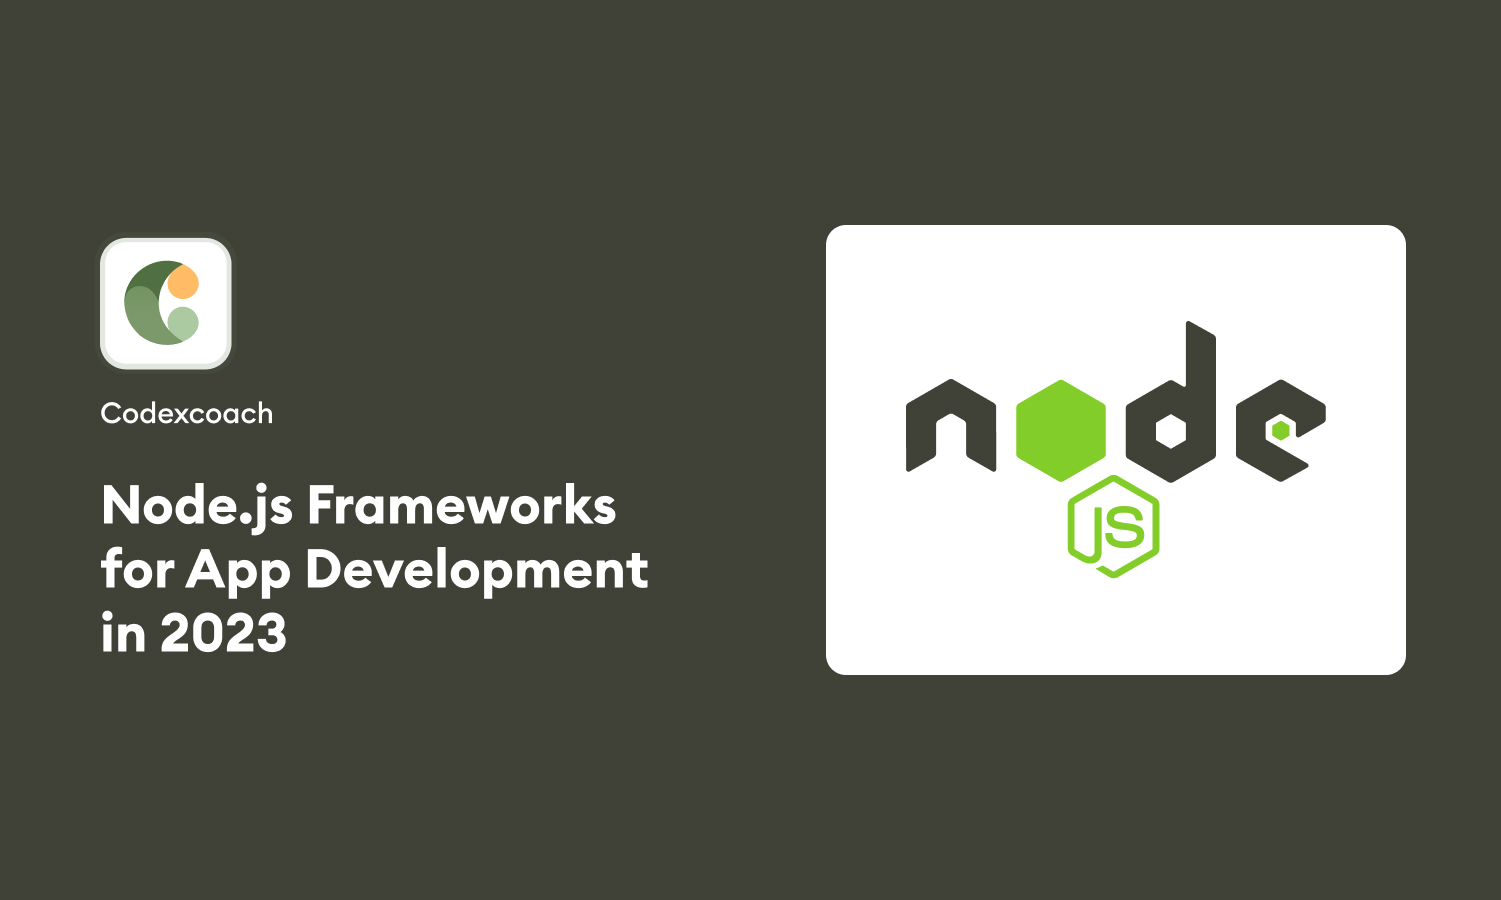 Node.js Frameworks for App Development in 2023